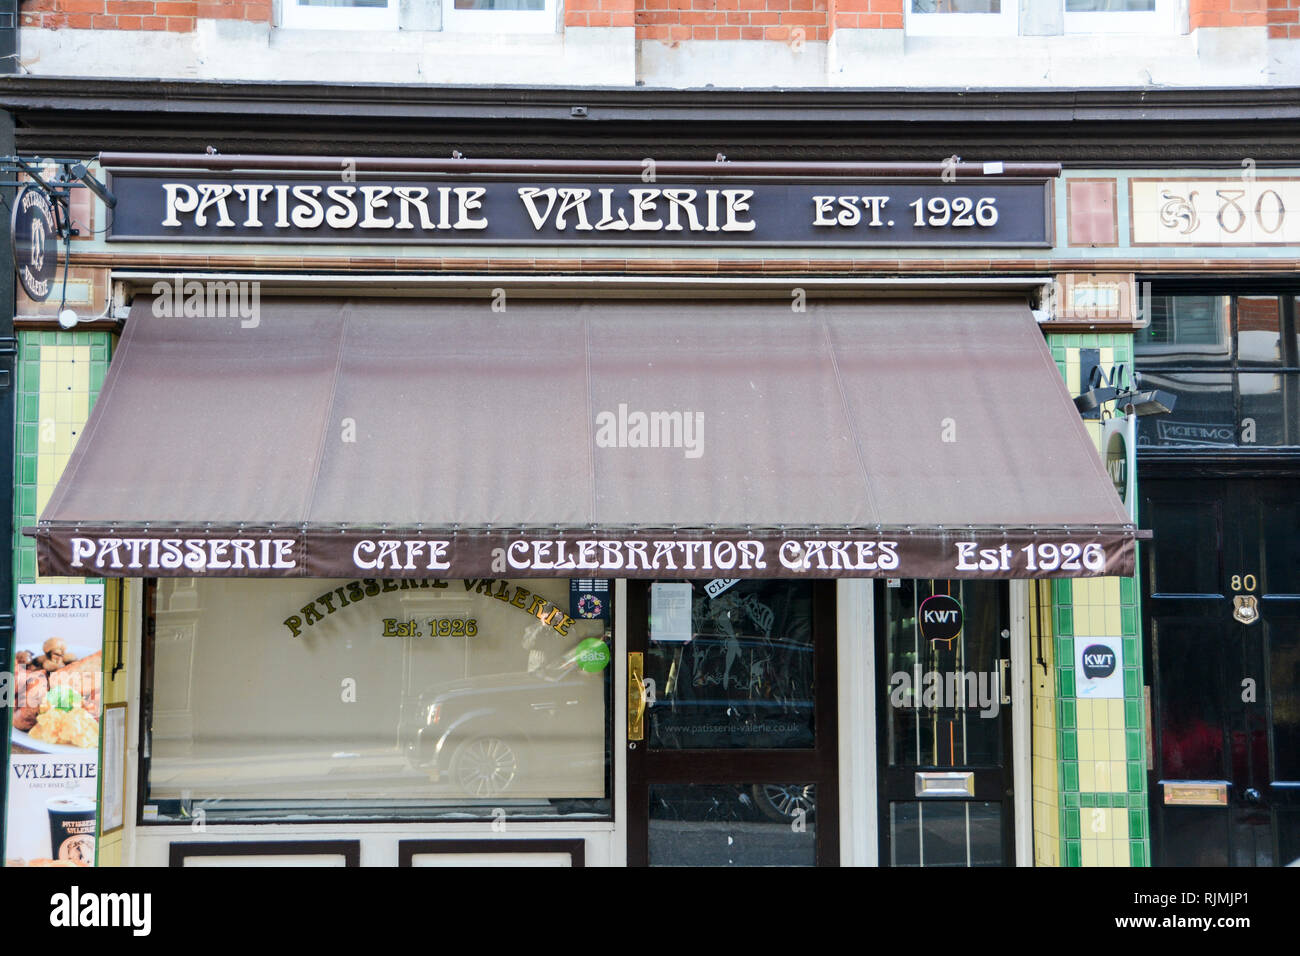 Äußere des nun geschlossenen Patisserie Valerie cafe Kette, London, UK Stockfoto